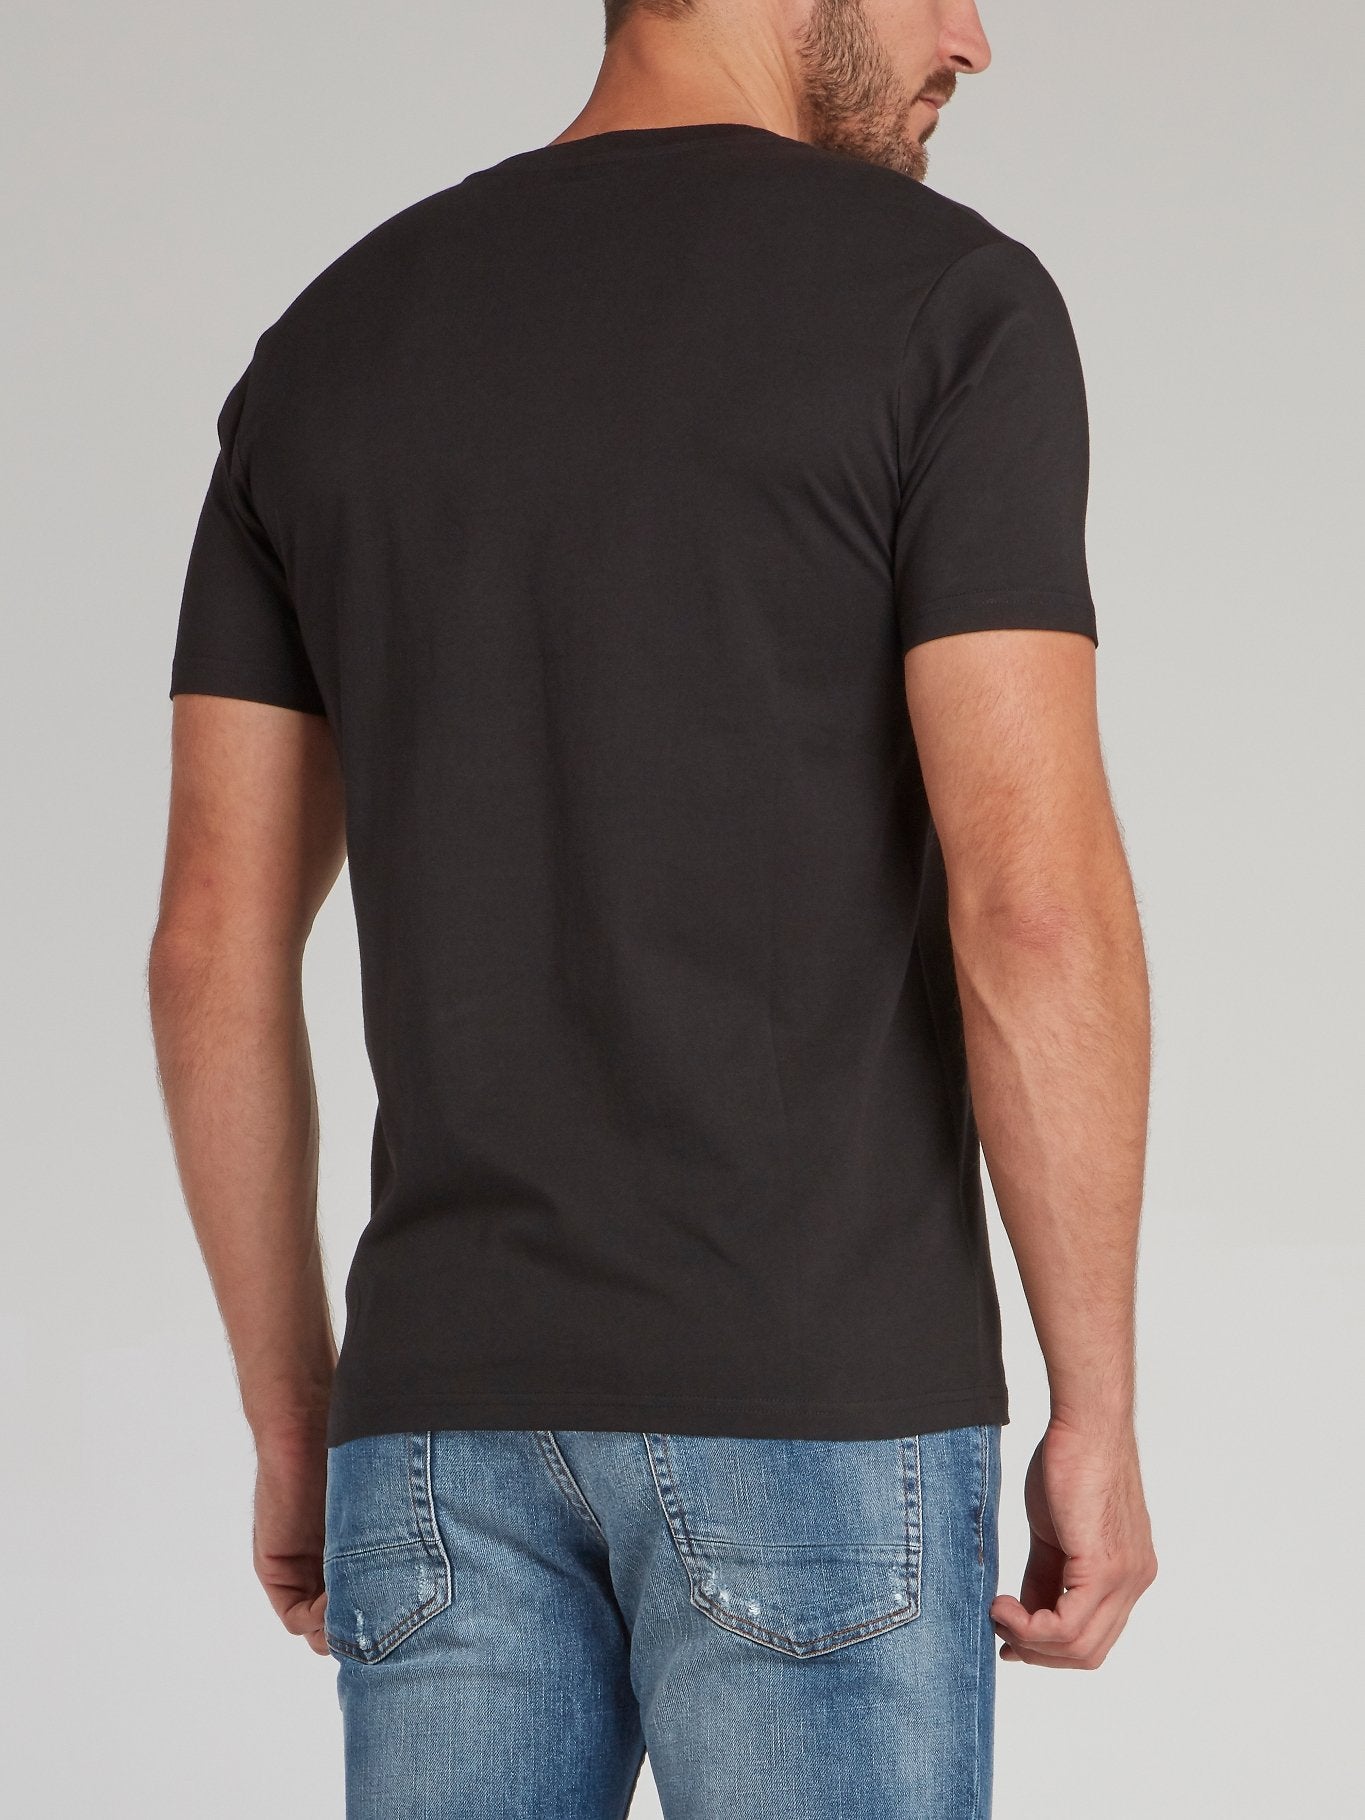 Black Crack Print T-Shirt